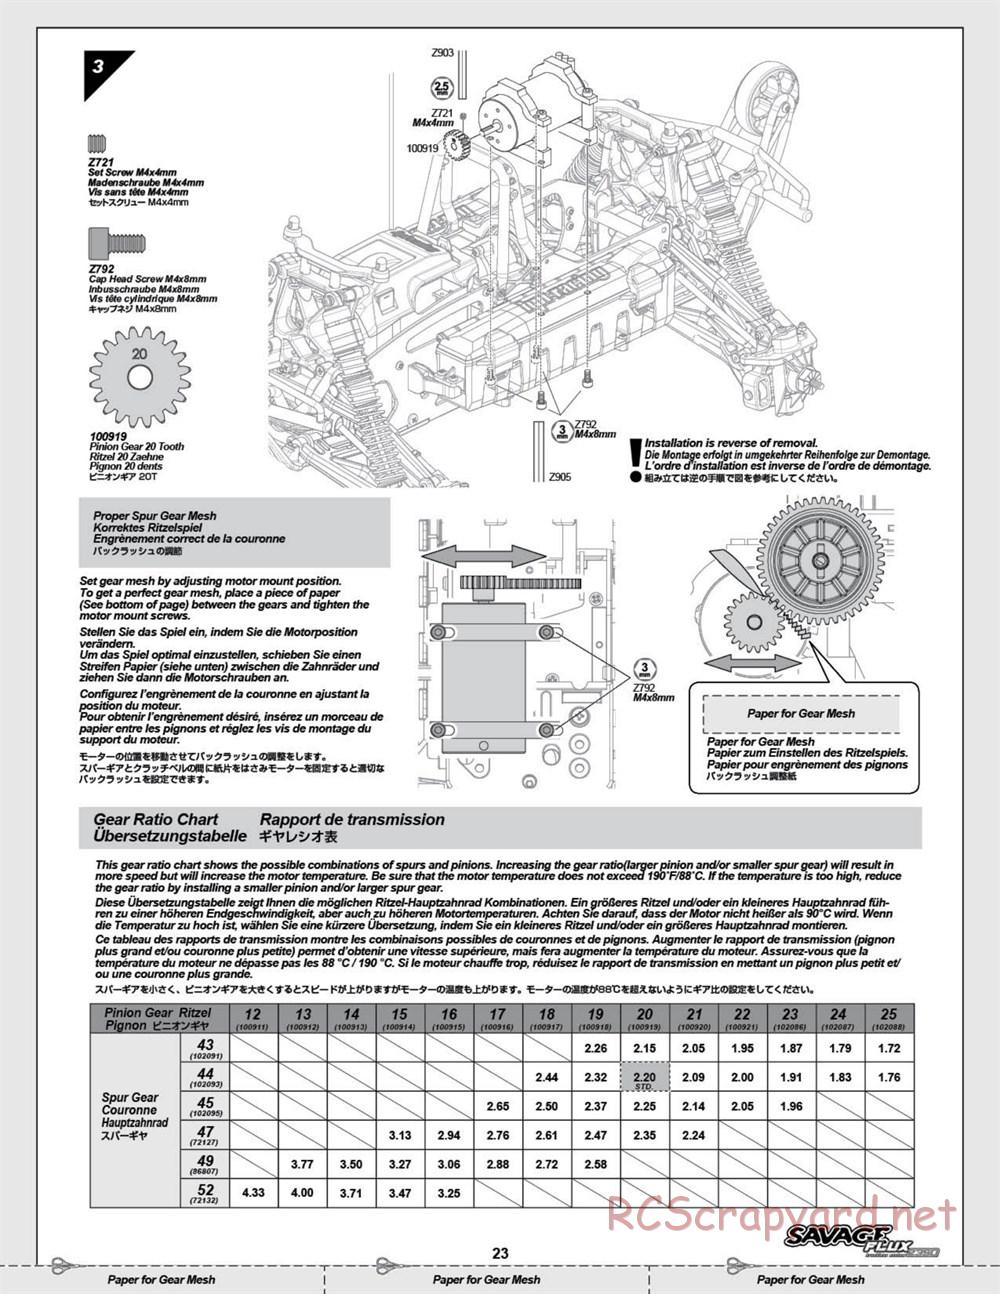 HPI - Savage Flux 2350 - Manual - Page 23